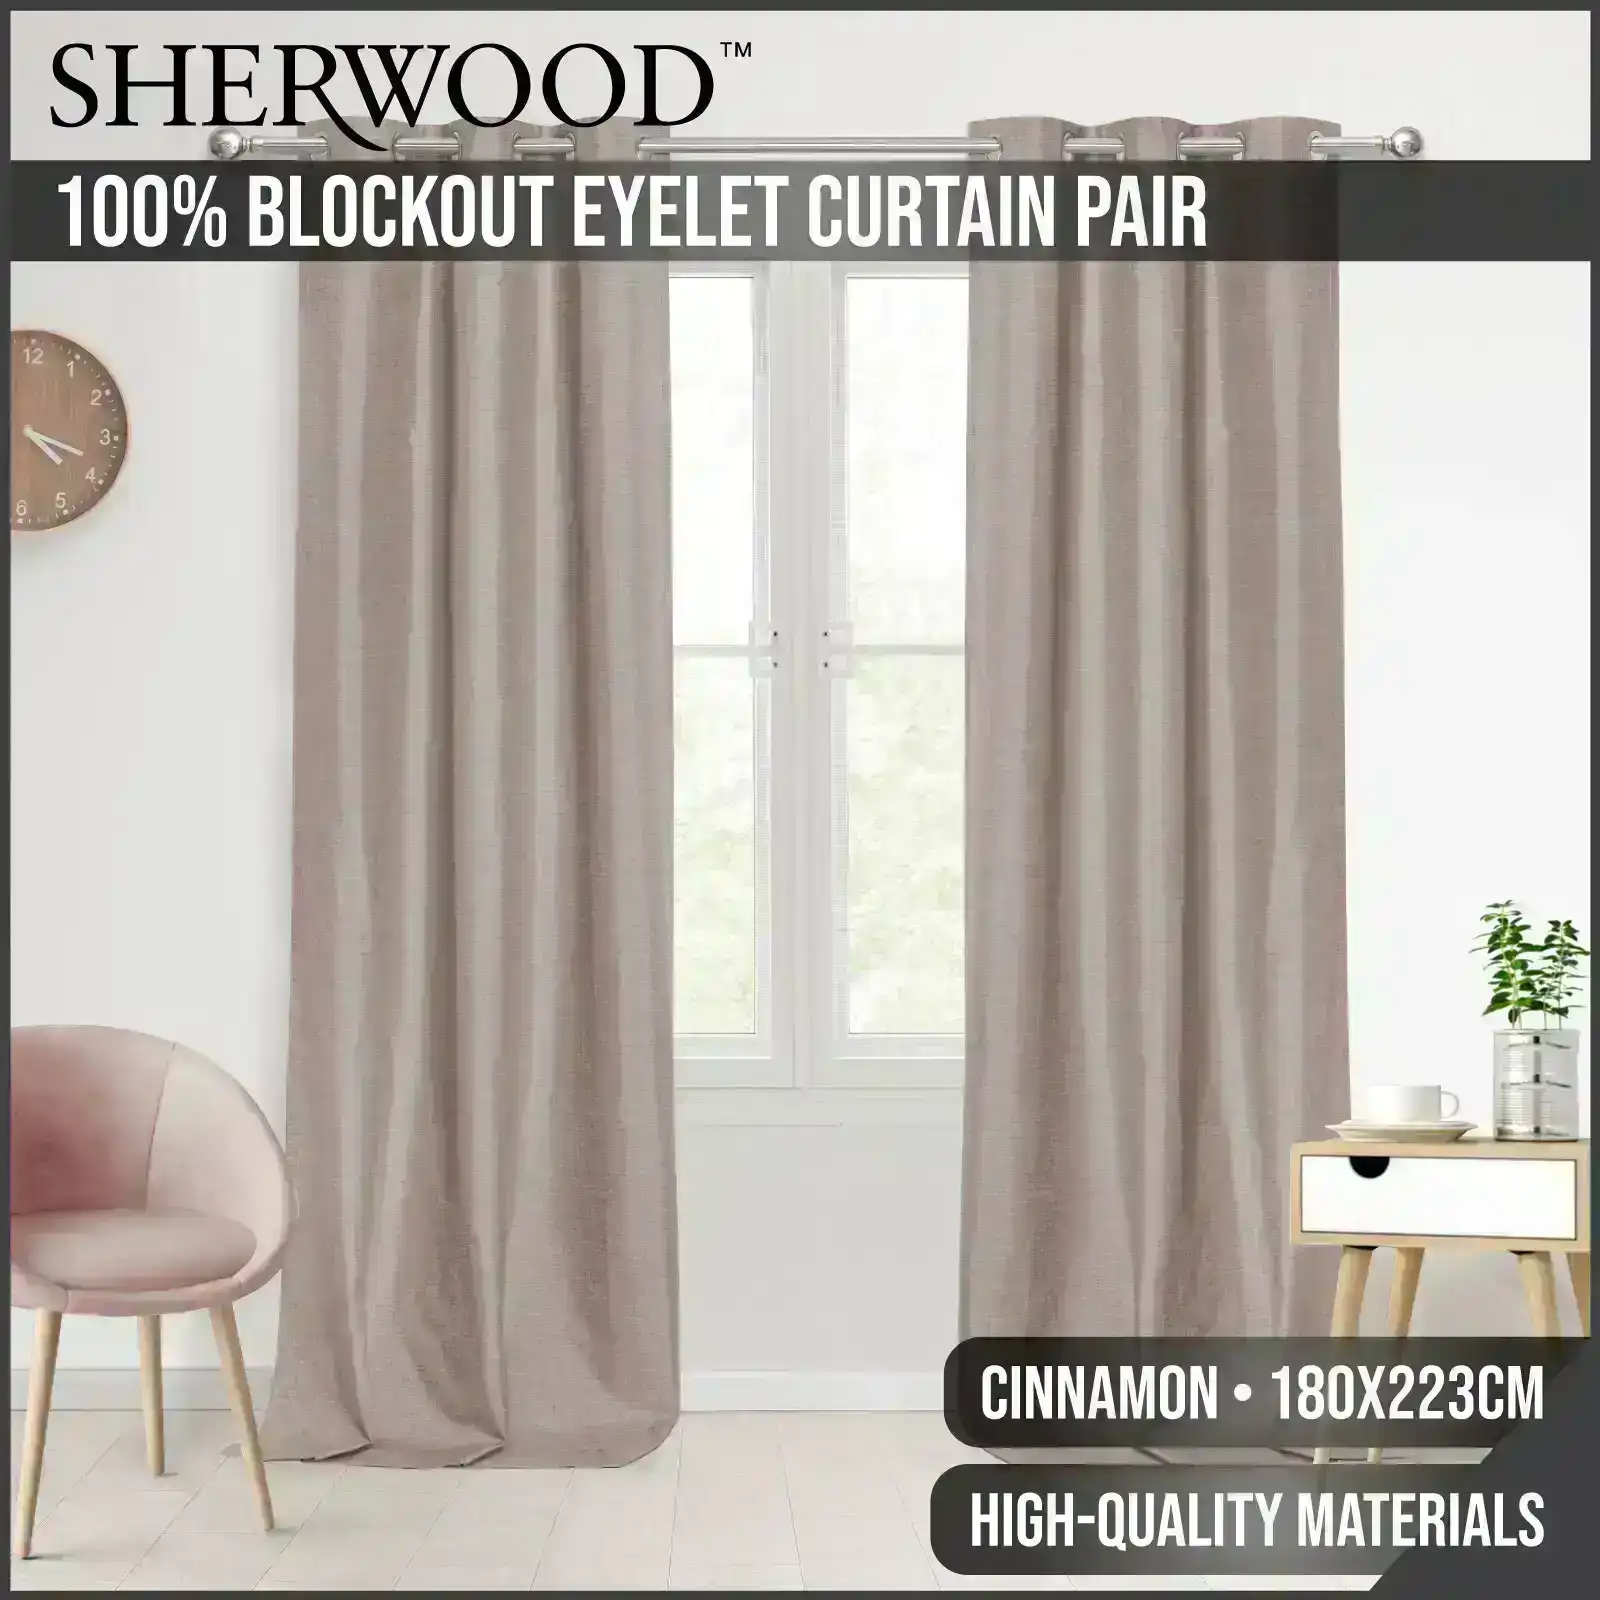 Sherwood Home 100% Blockout Eyelet Curtain Pair Cinnamon 180x223cm